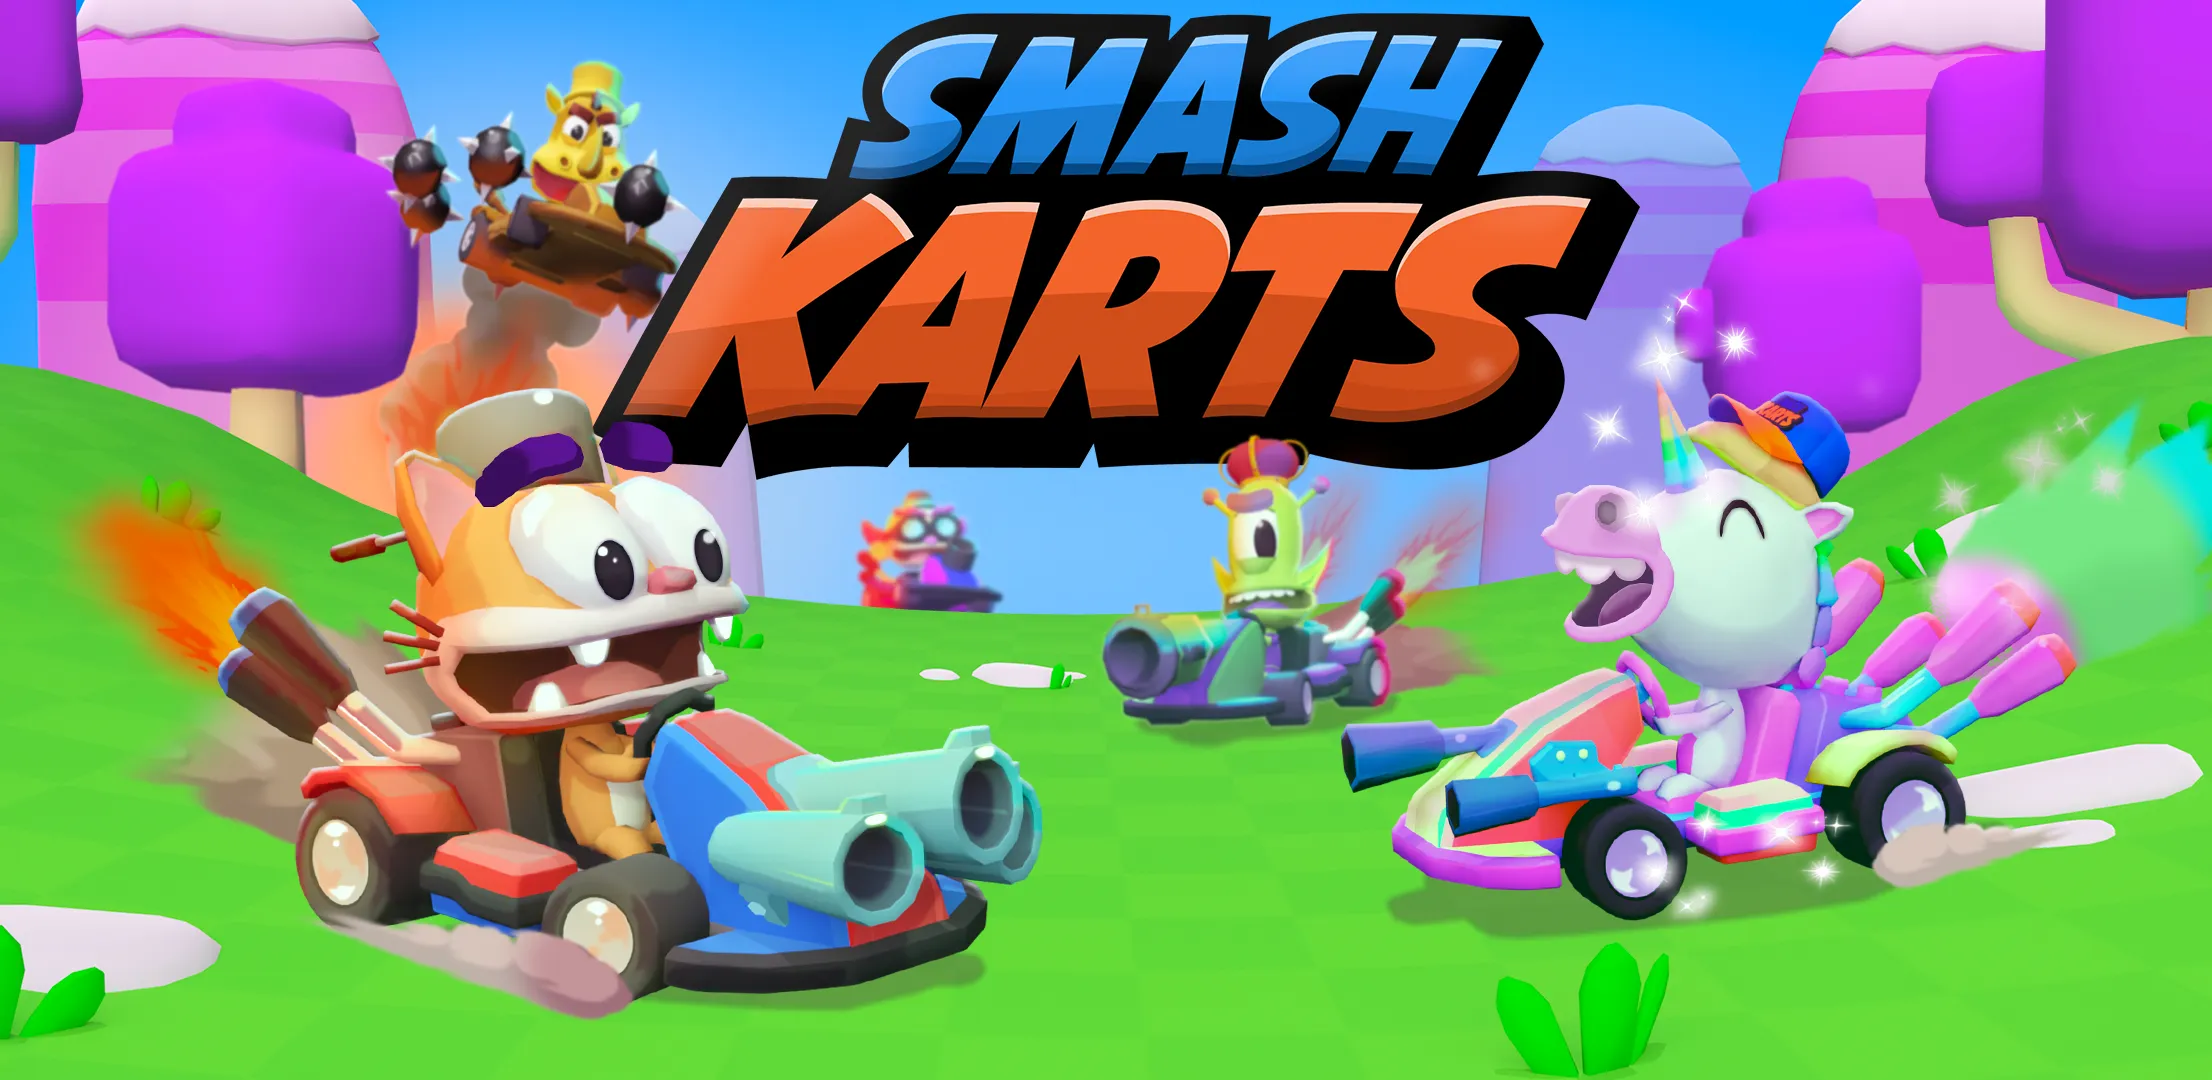 Smash Karts promo image